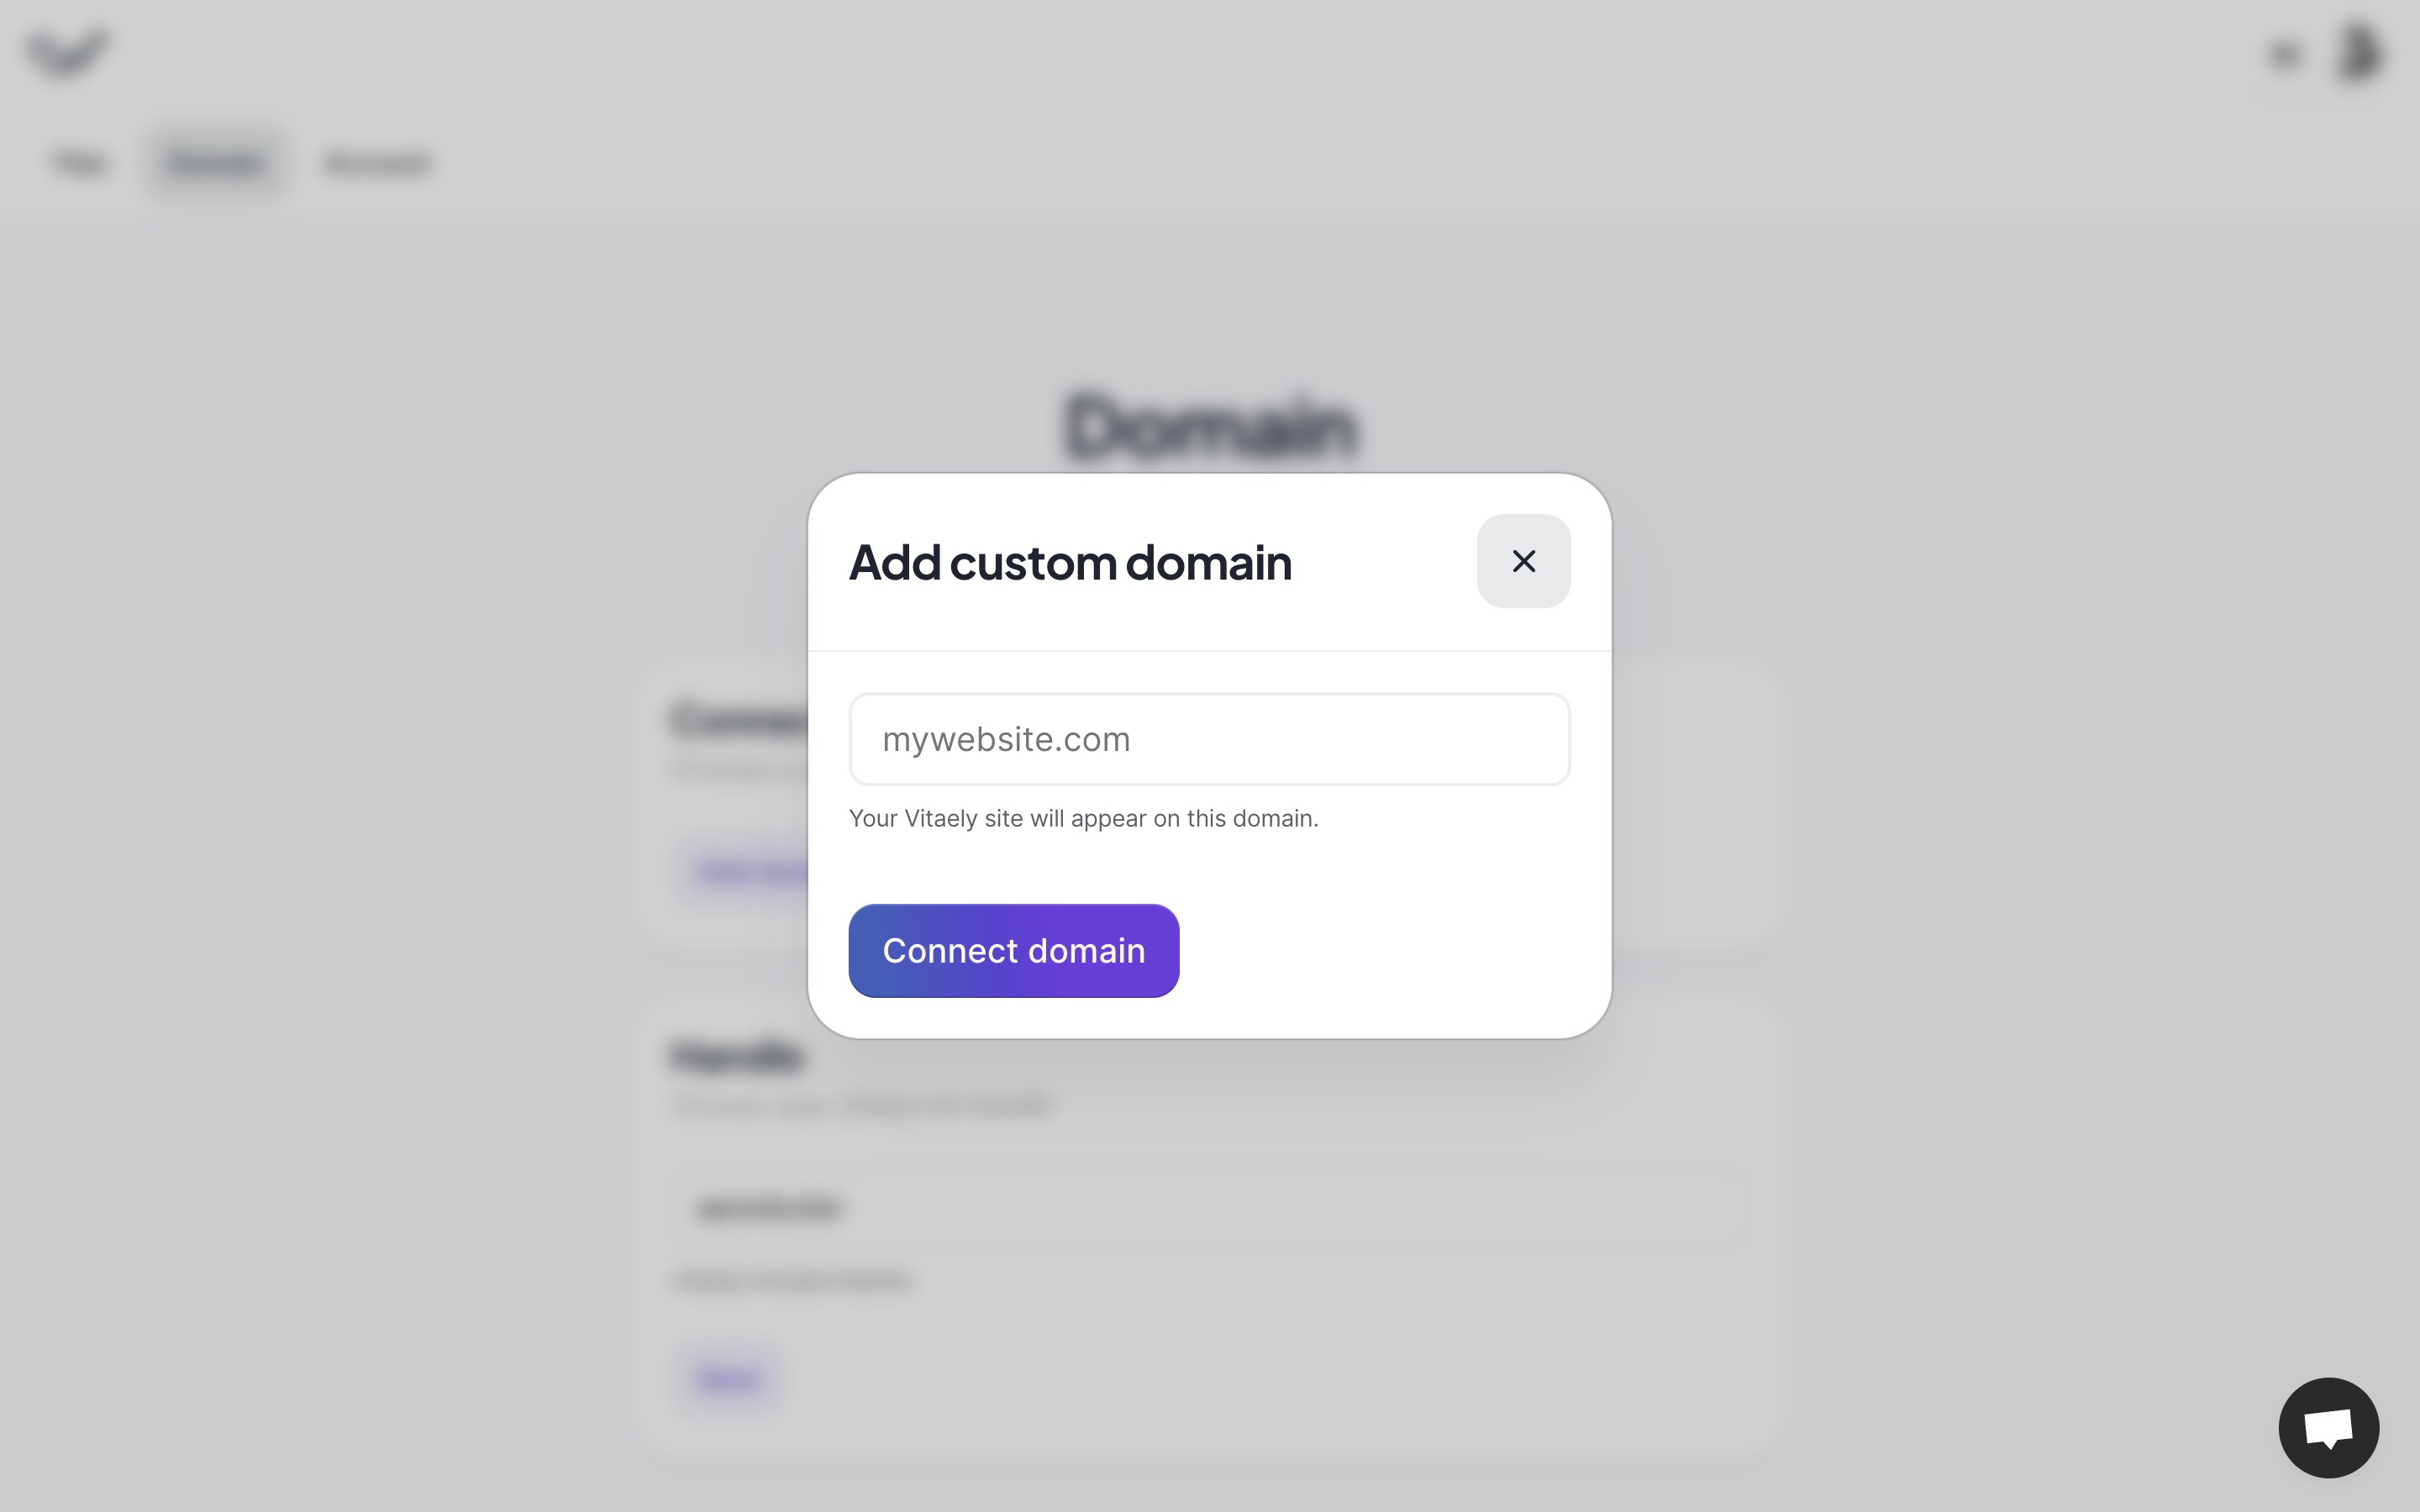 Enter your custom domain